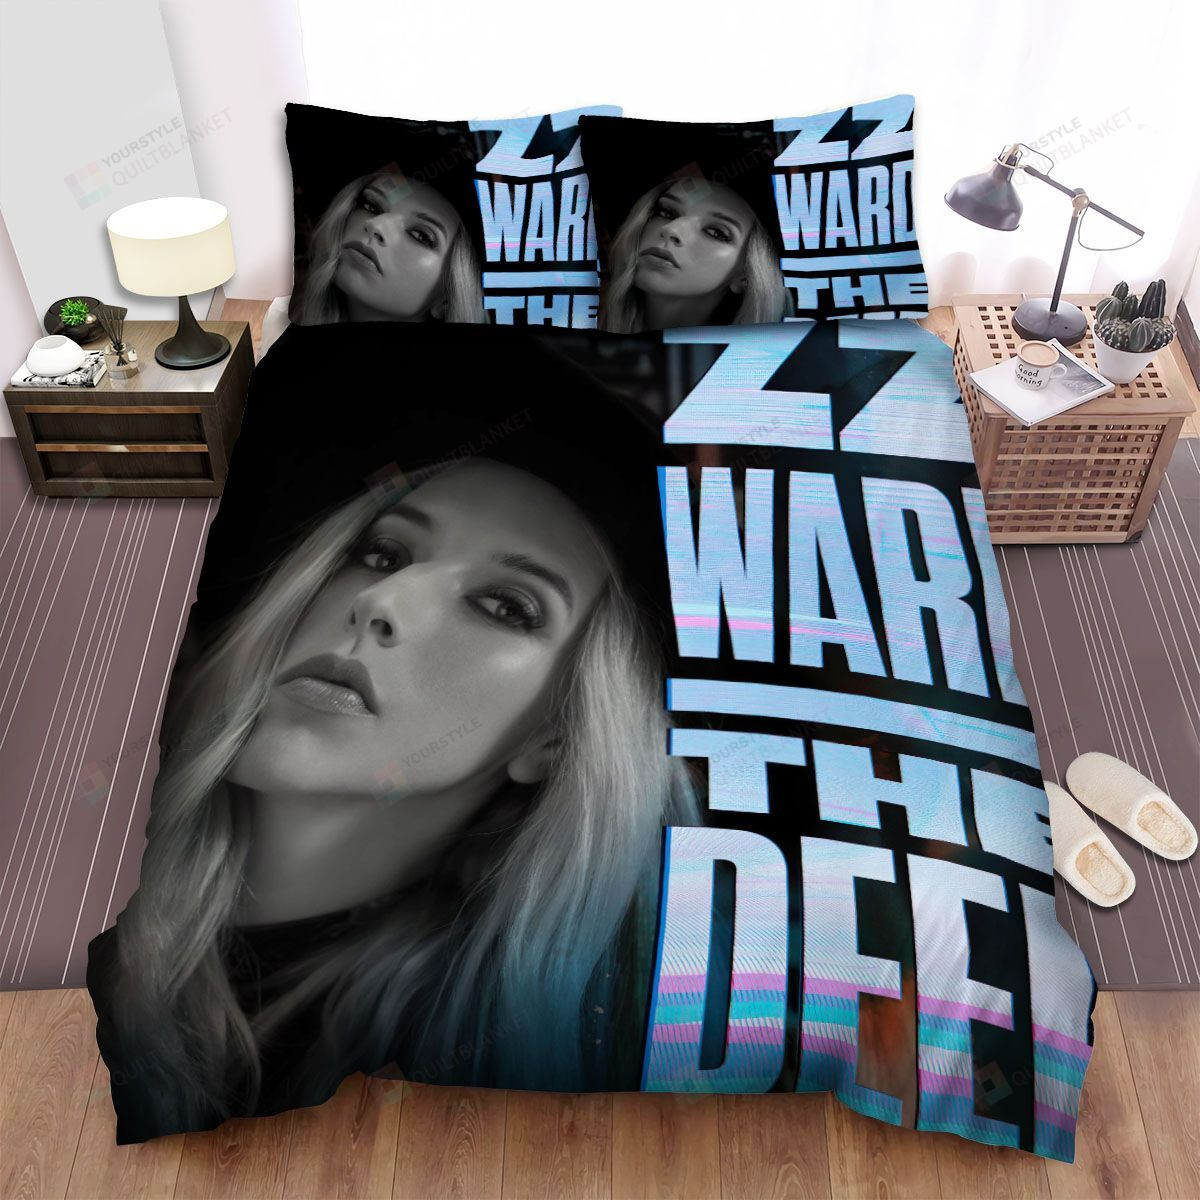 Zz Ward Music The Deep Poster Spread Comforter Bedding Sets